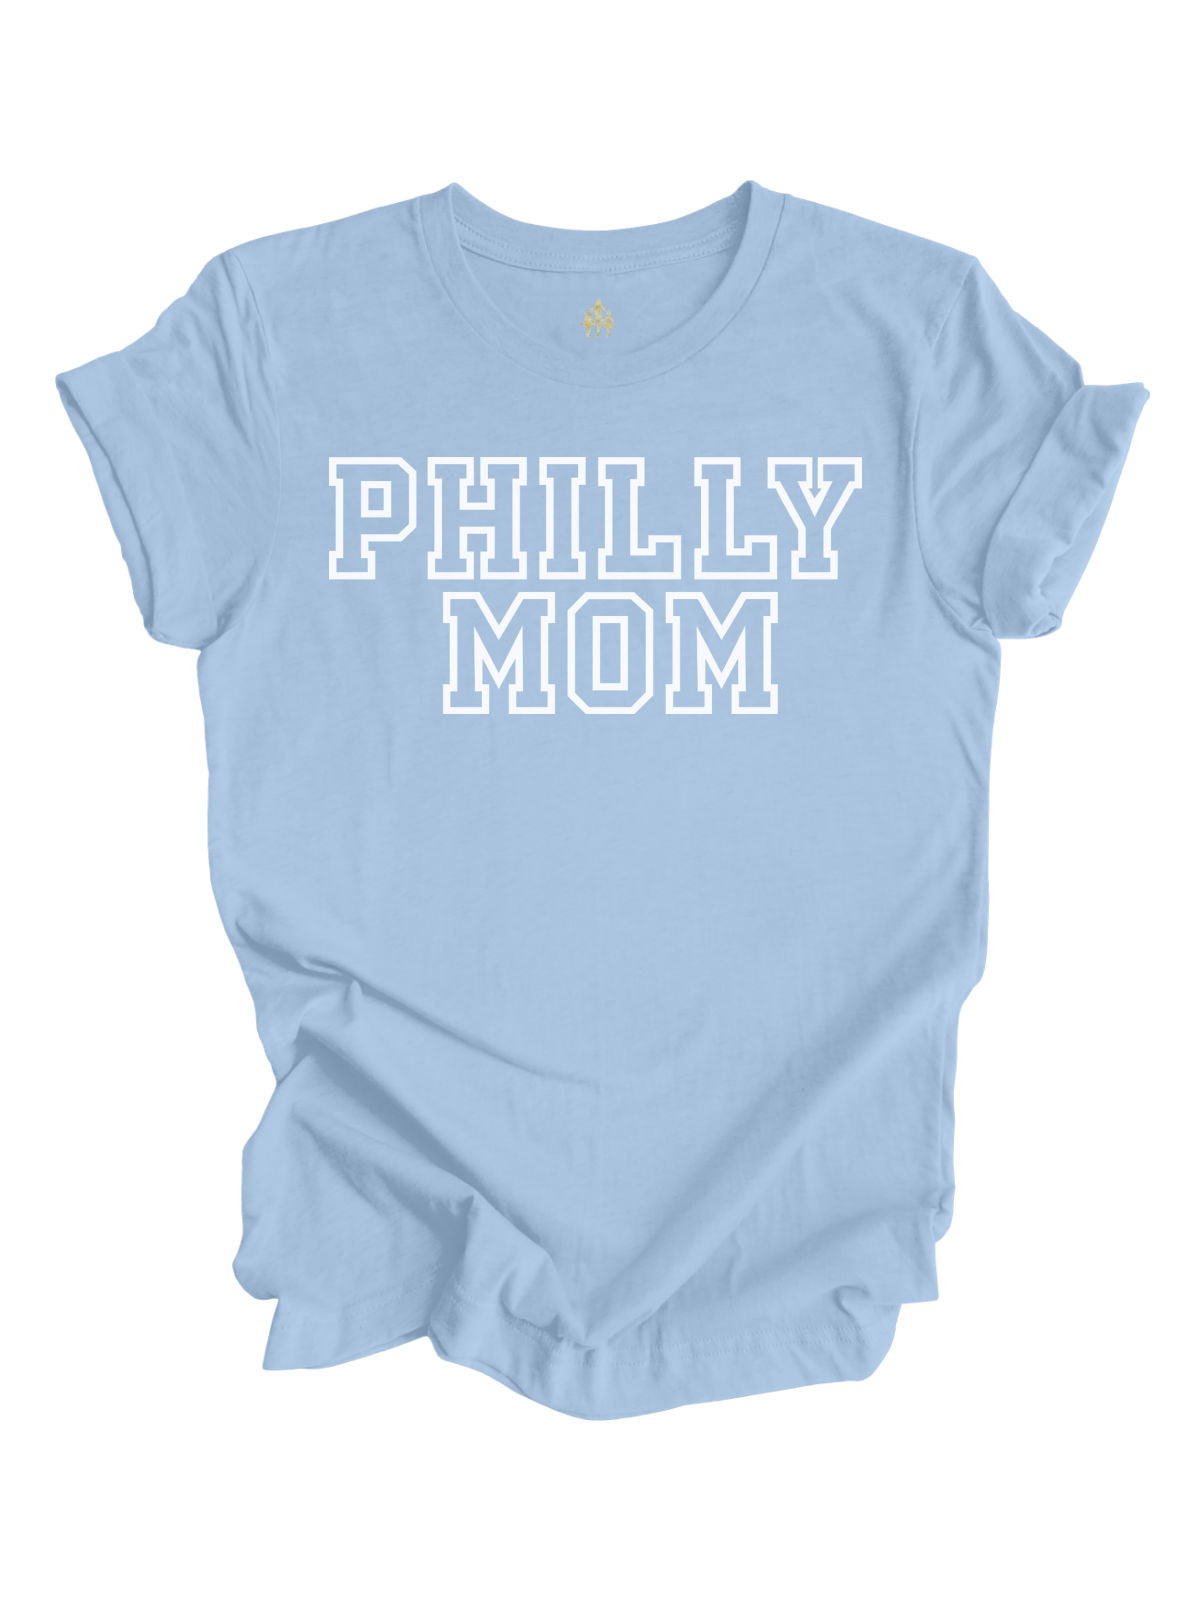 Philly Mom Varsity Shirt in Baby Blue